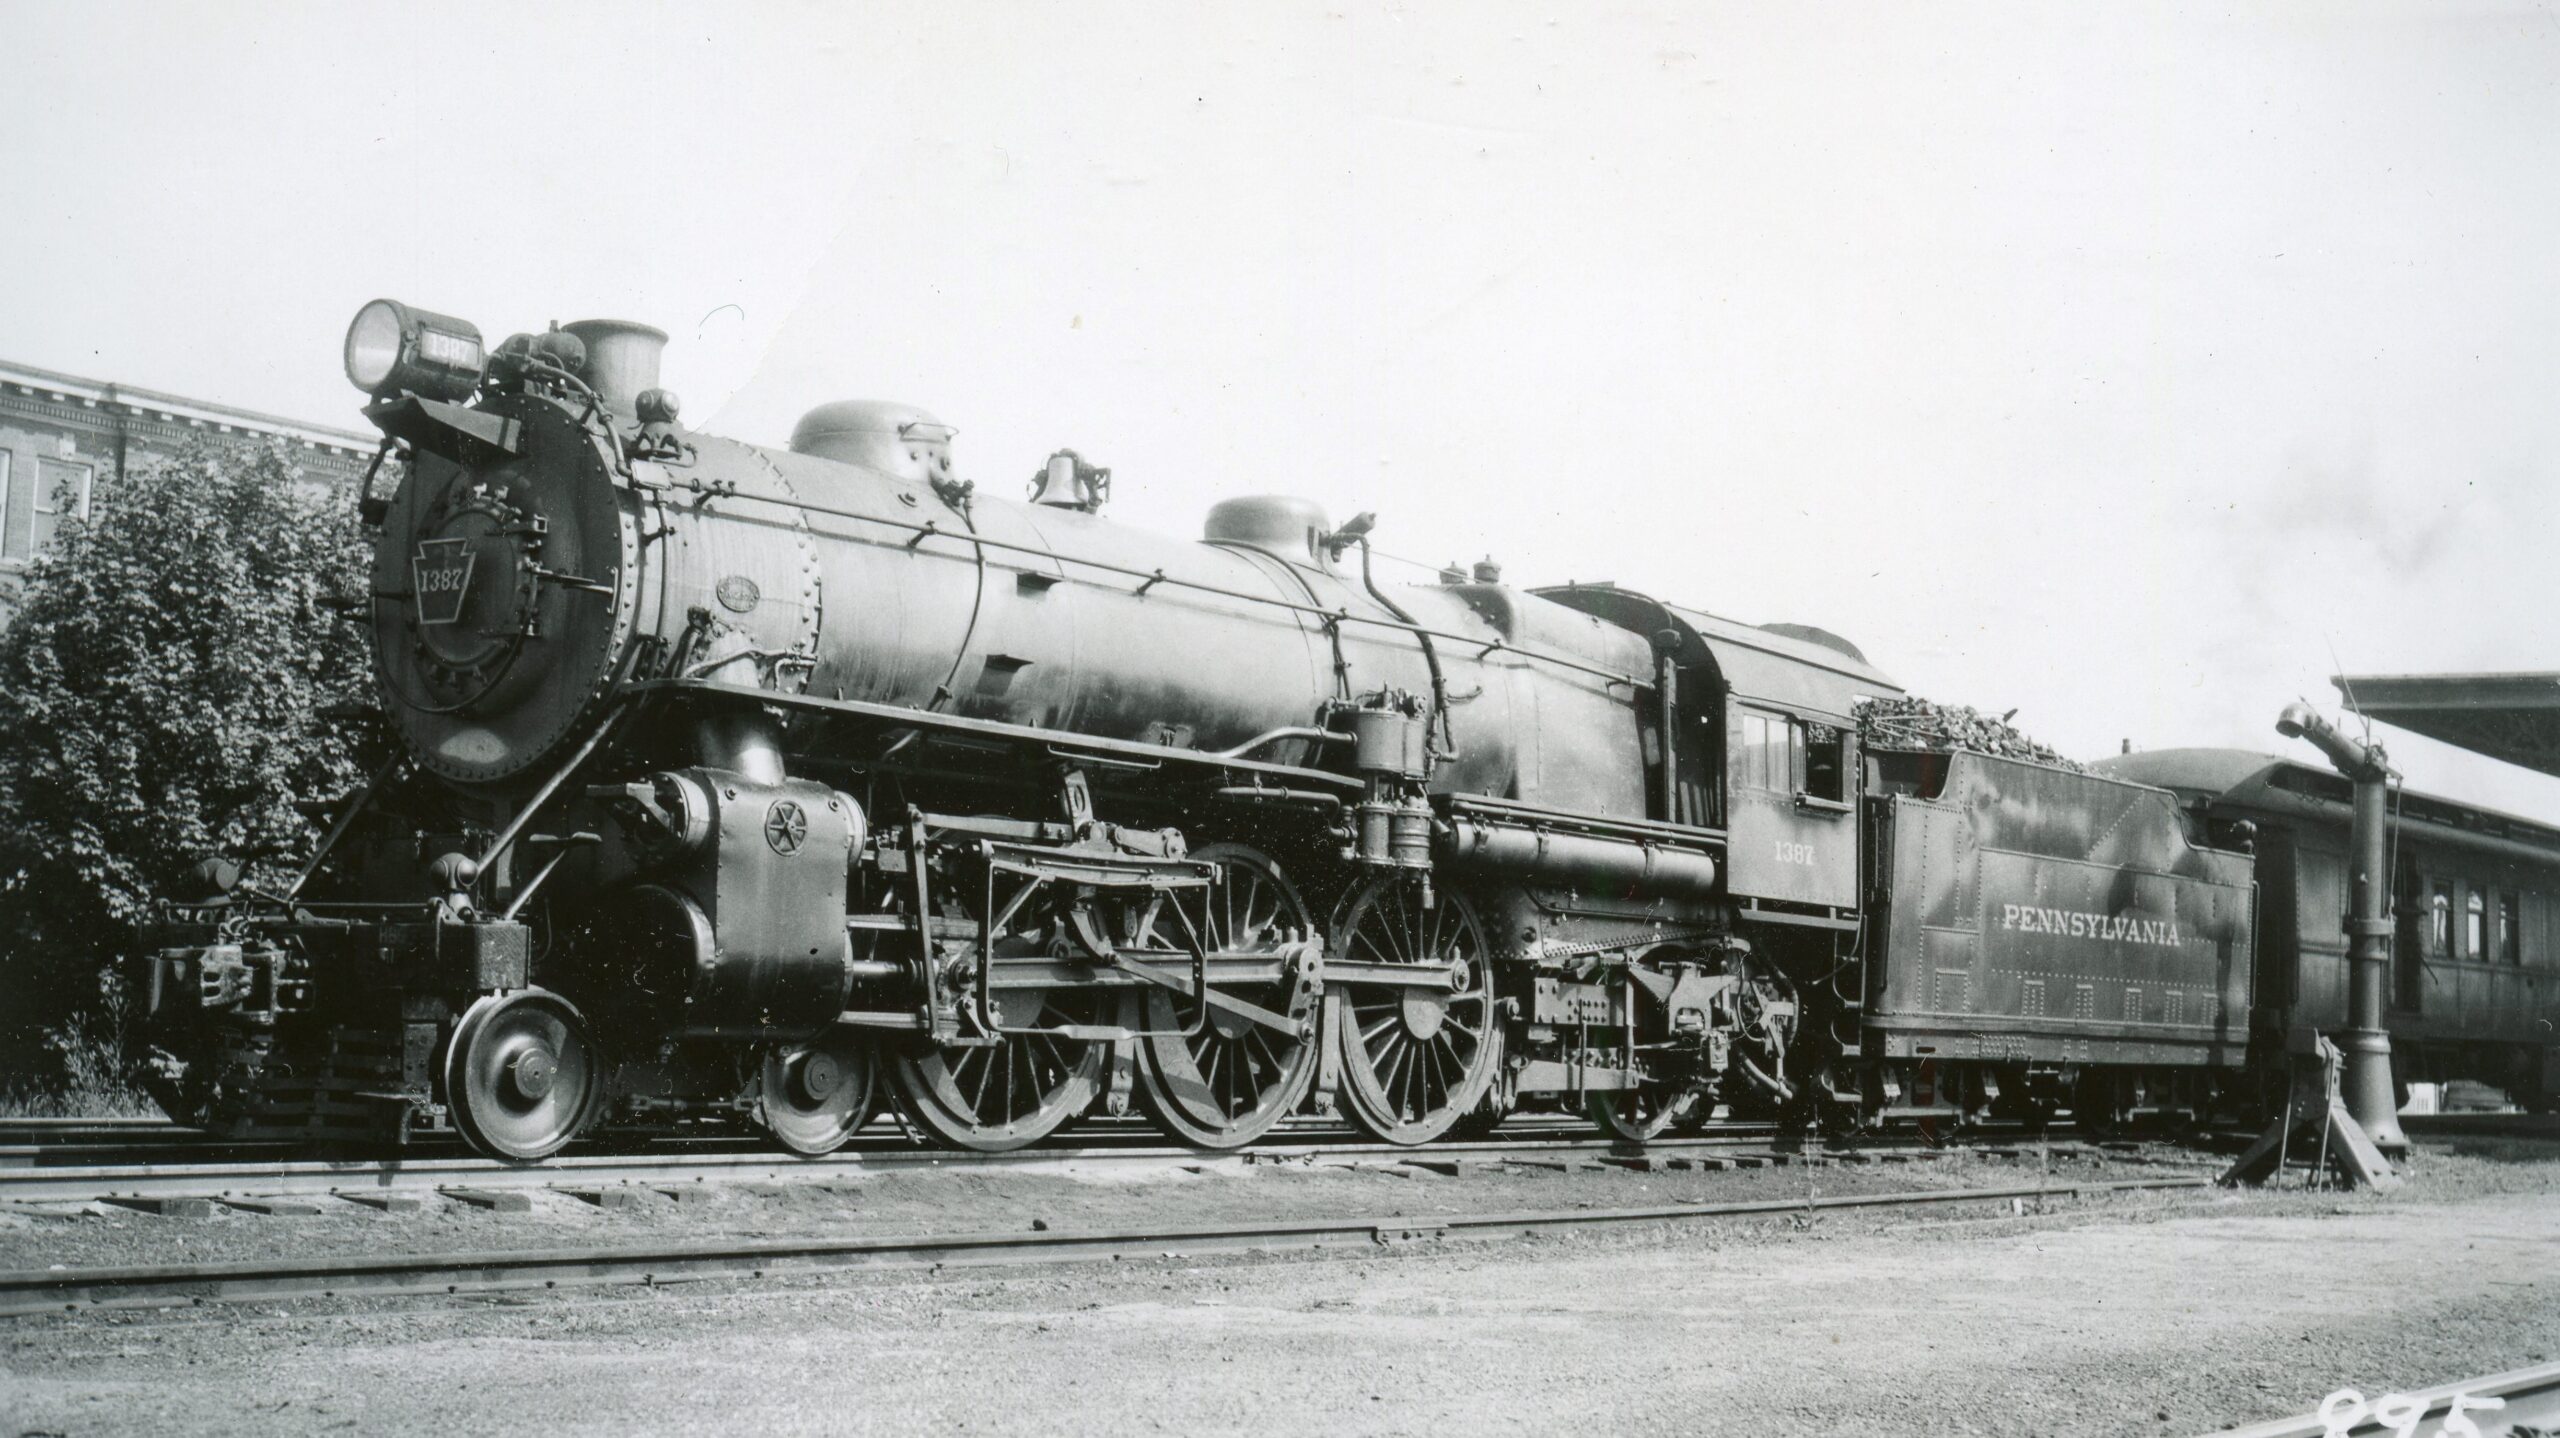 Pennsylvania Railroad | Chambersburg, Pennsylvania | K2sa 4-6-2 #1387 | Station | Water plug | June 16, 1940 | John Bowman, Jr. photpgraph